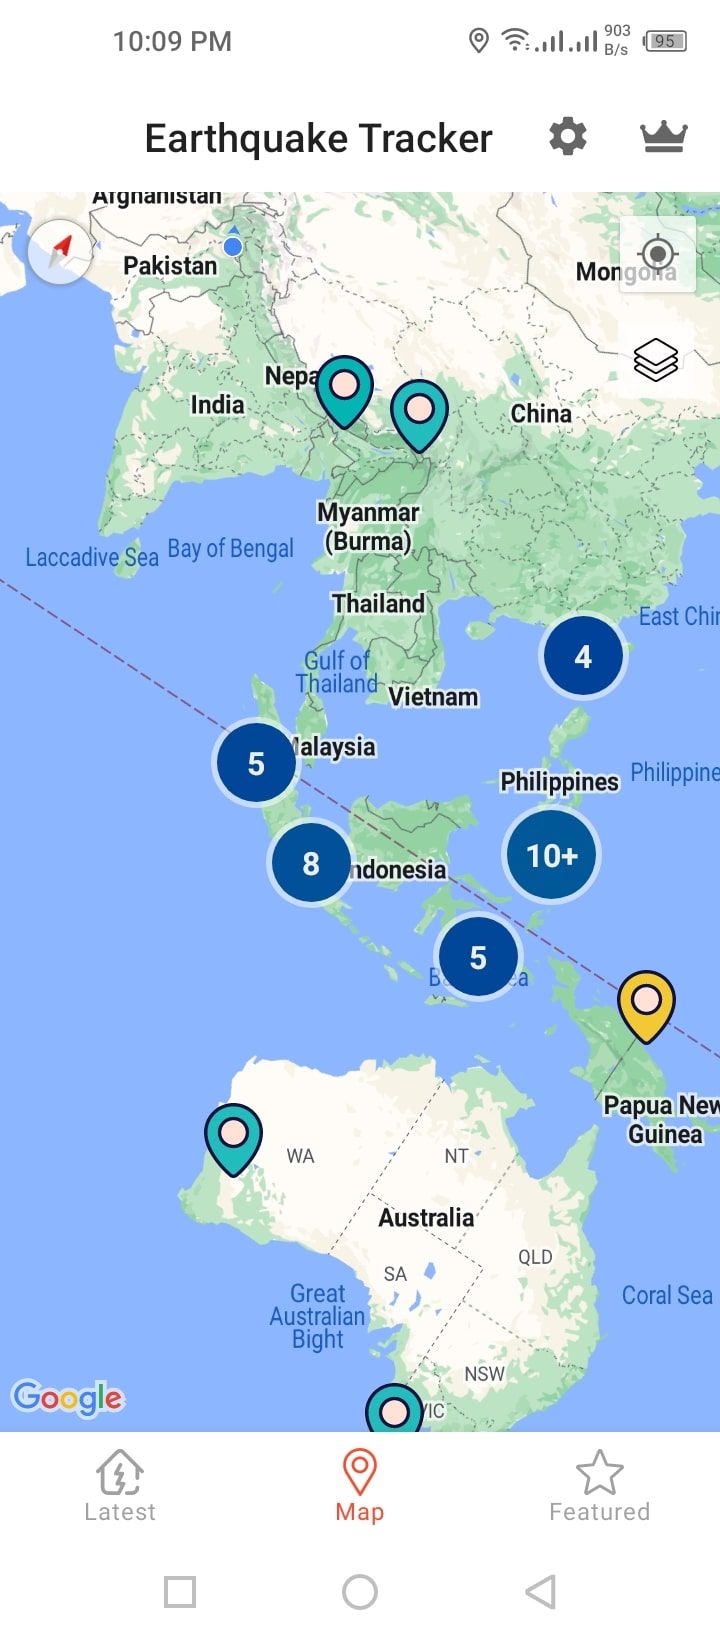 Earthquake Tracker App - Map View